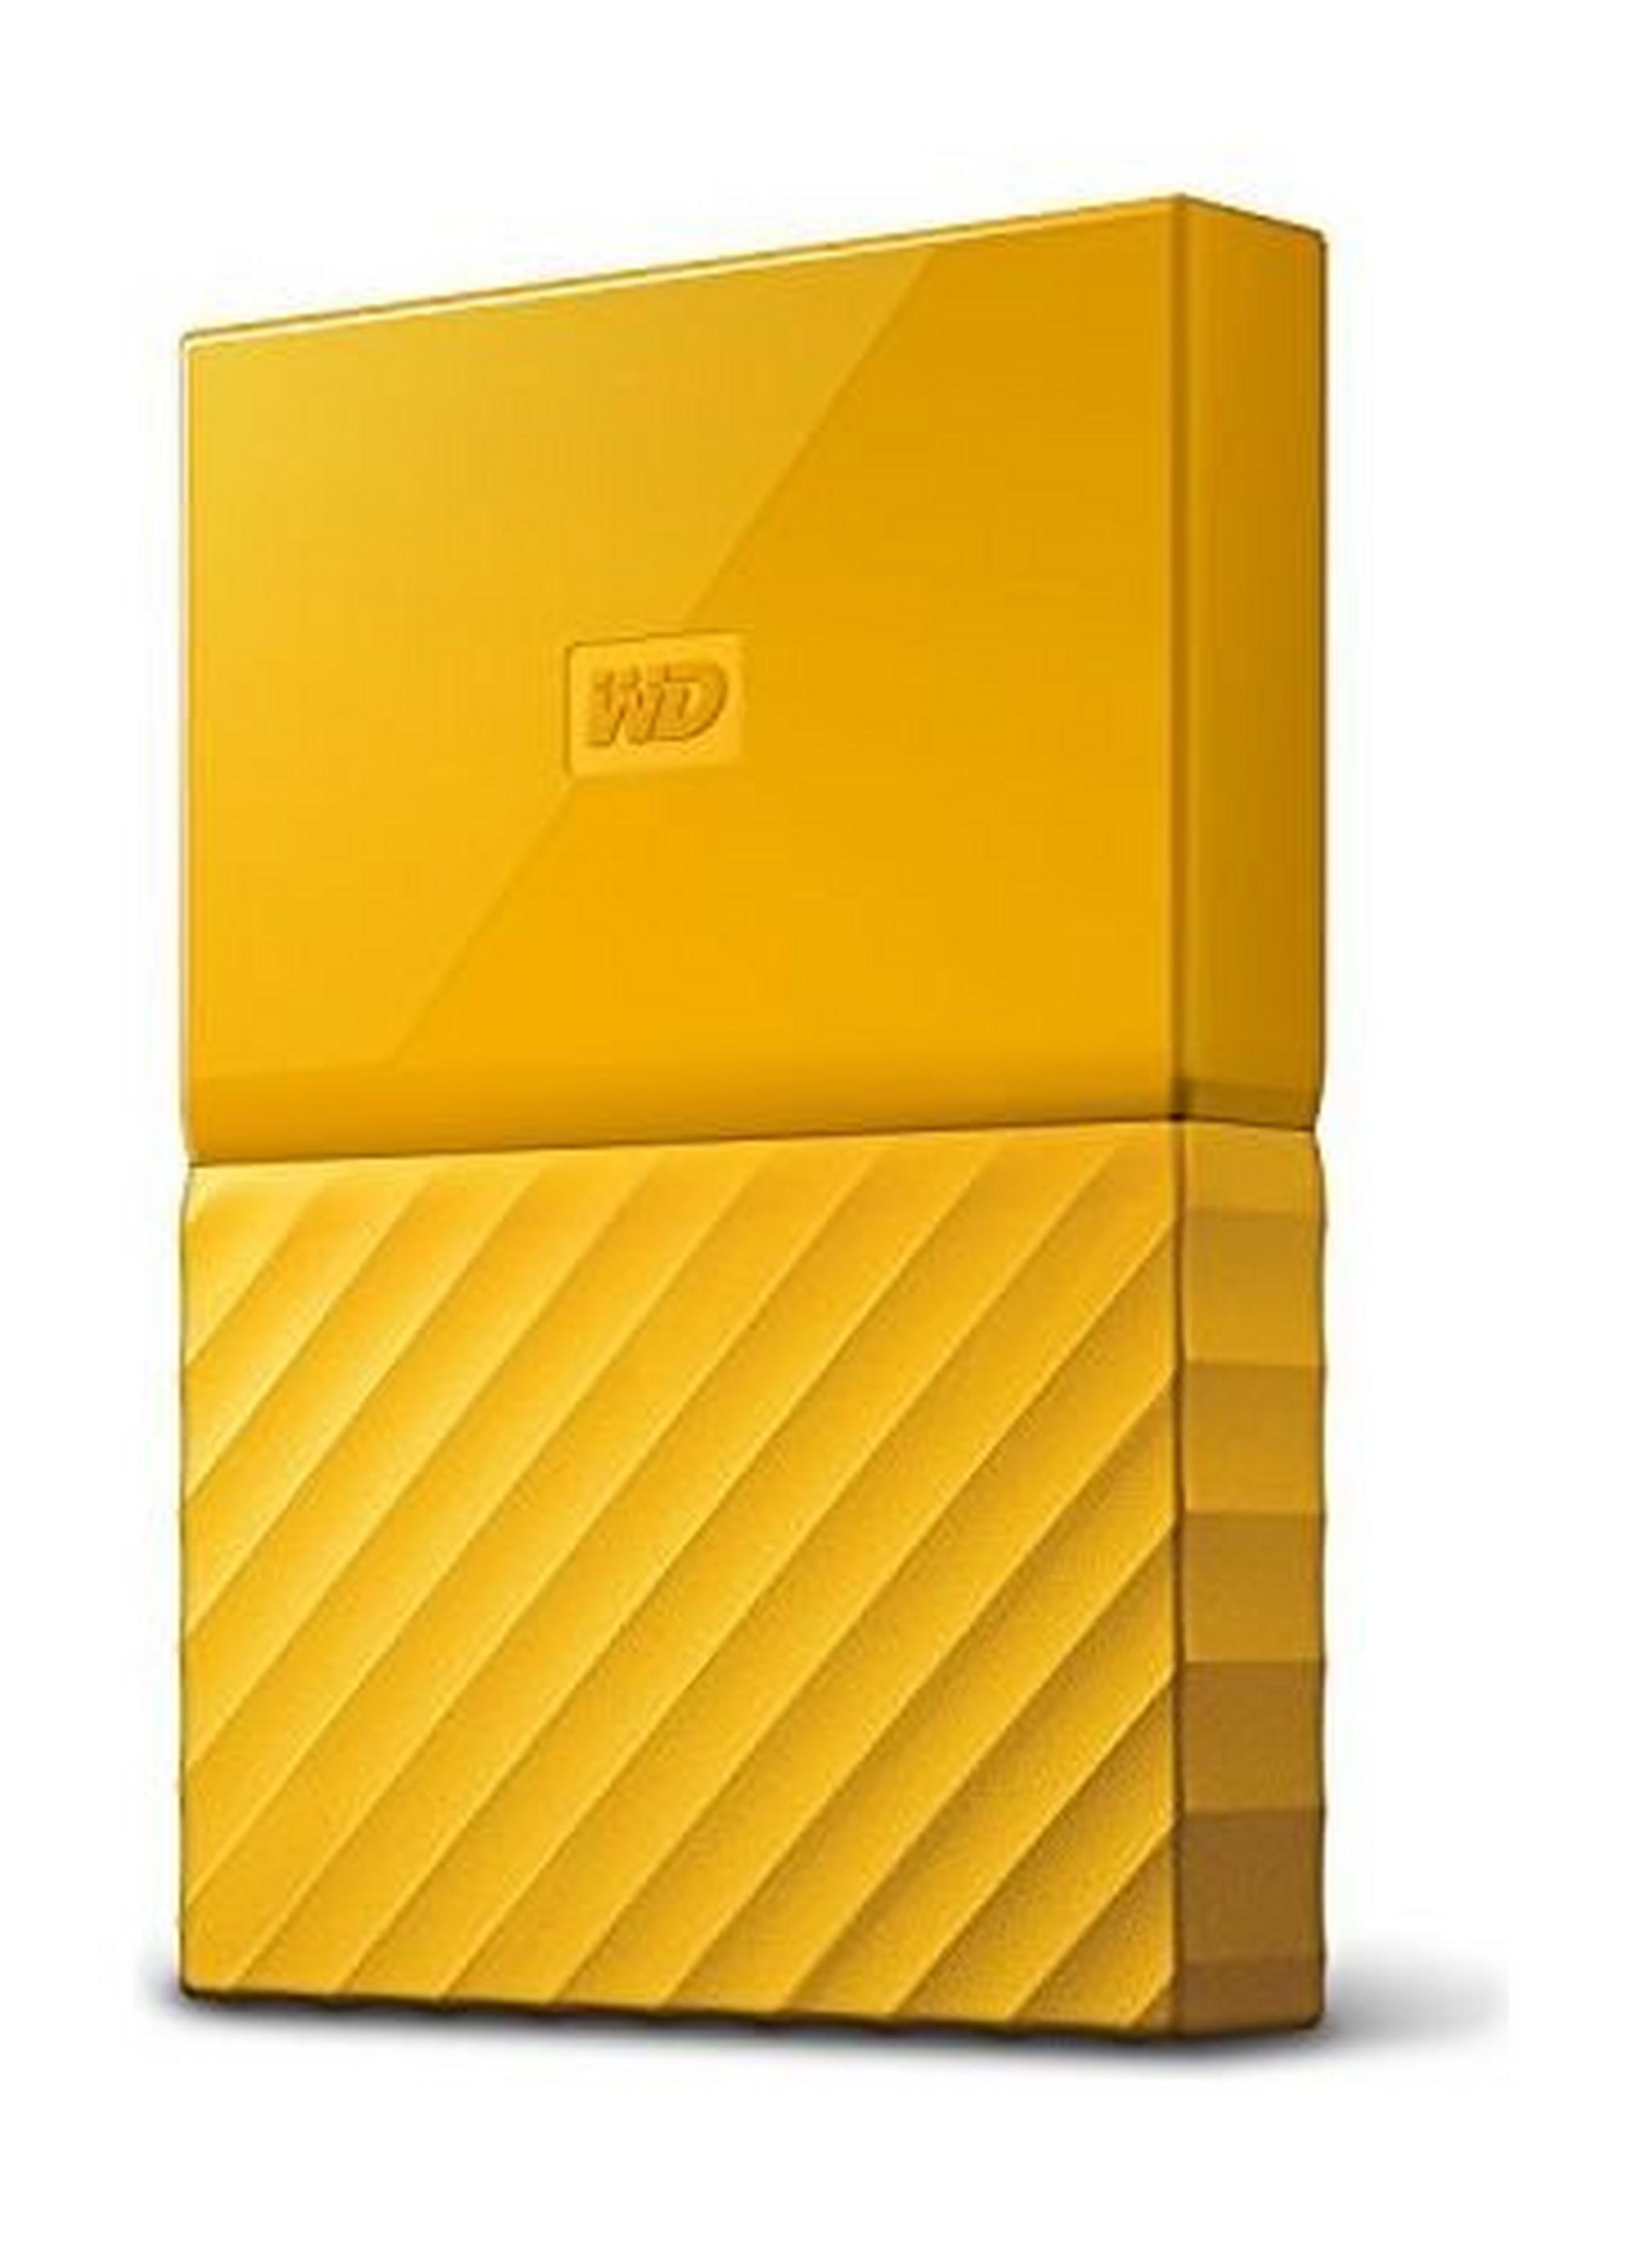 WD 2TB My Passport USB 3.0 External Hard Drive - Yellow